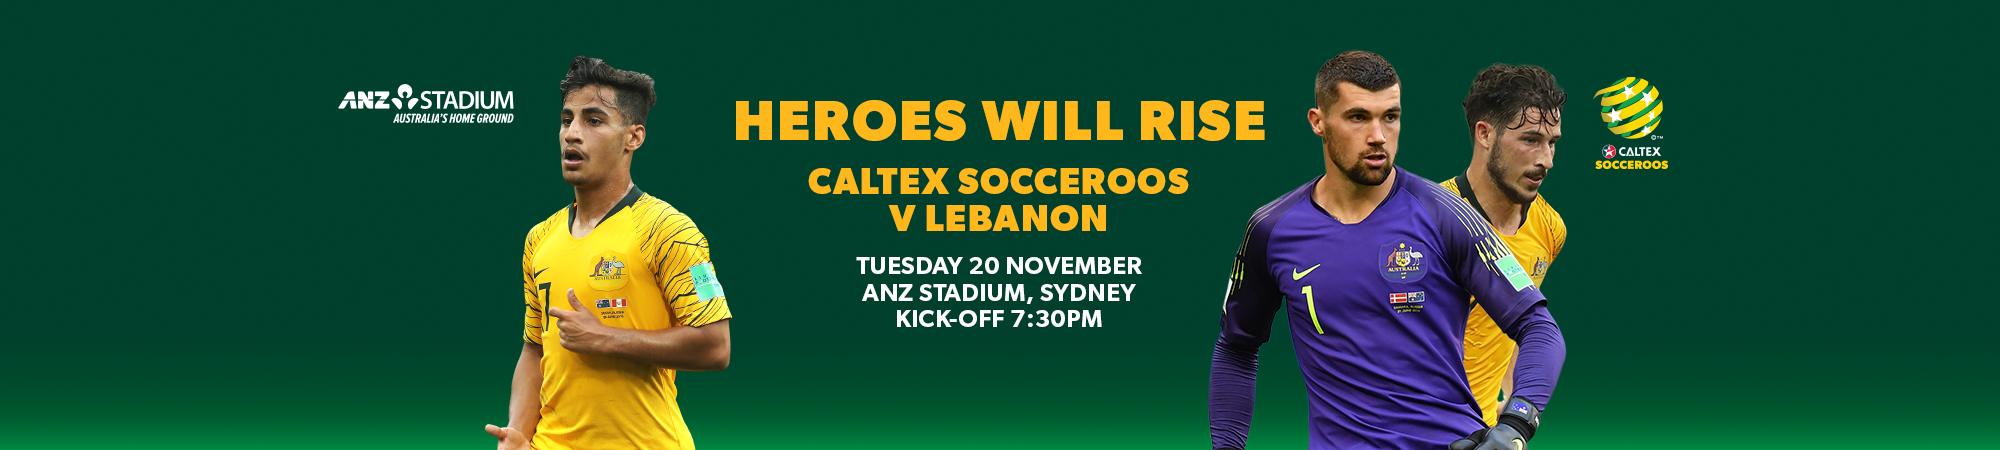 Caltex Socceroos v Lebanon